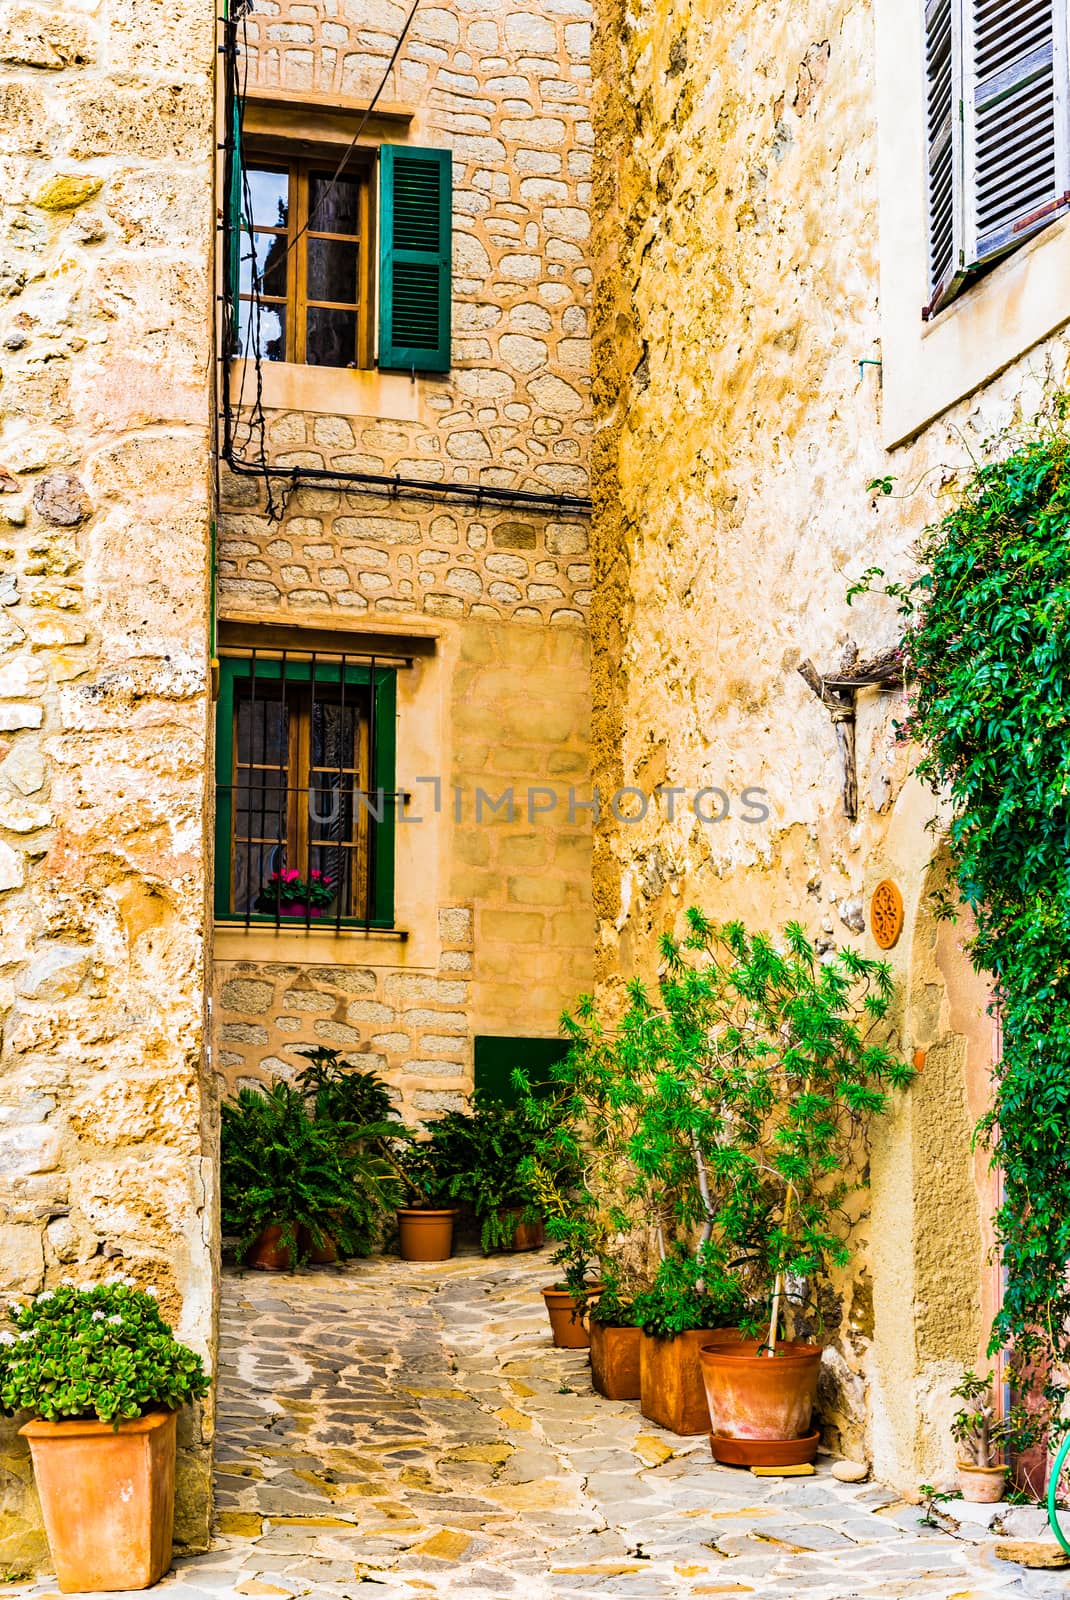 Idyllic old mediterranean village with narrow alley way